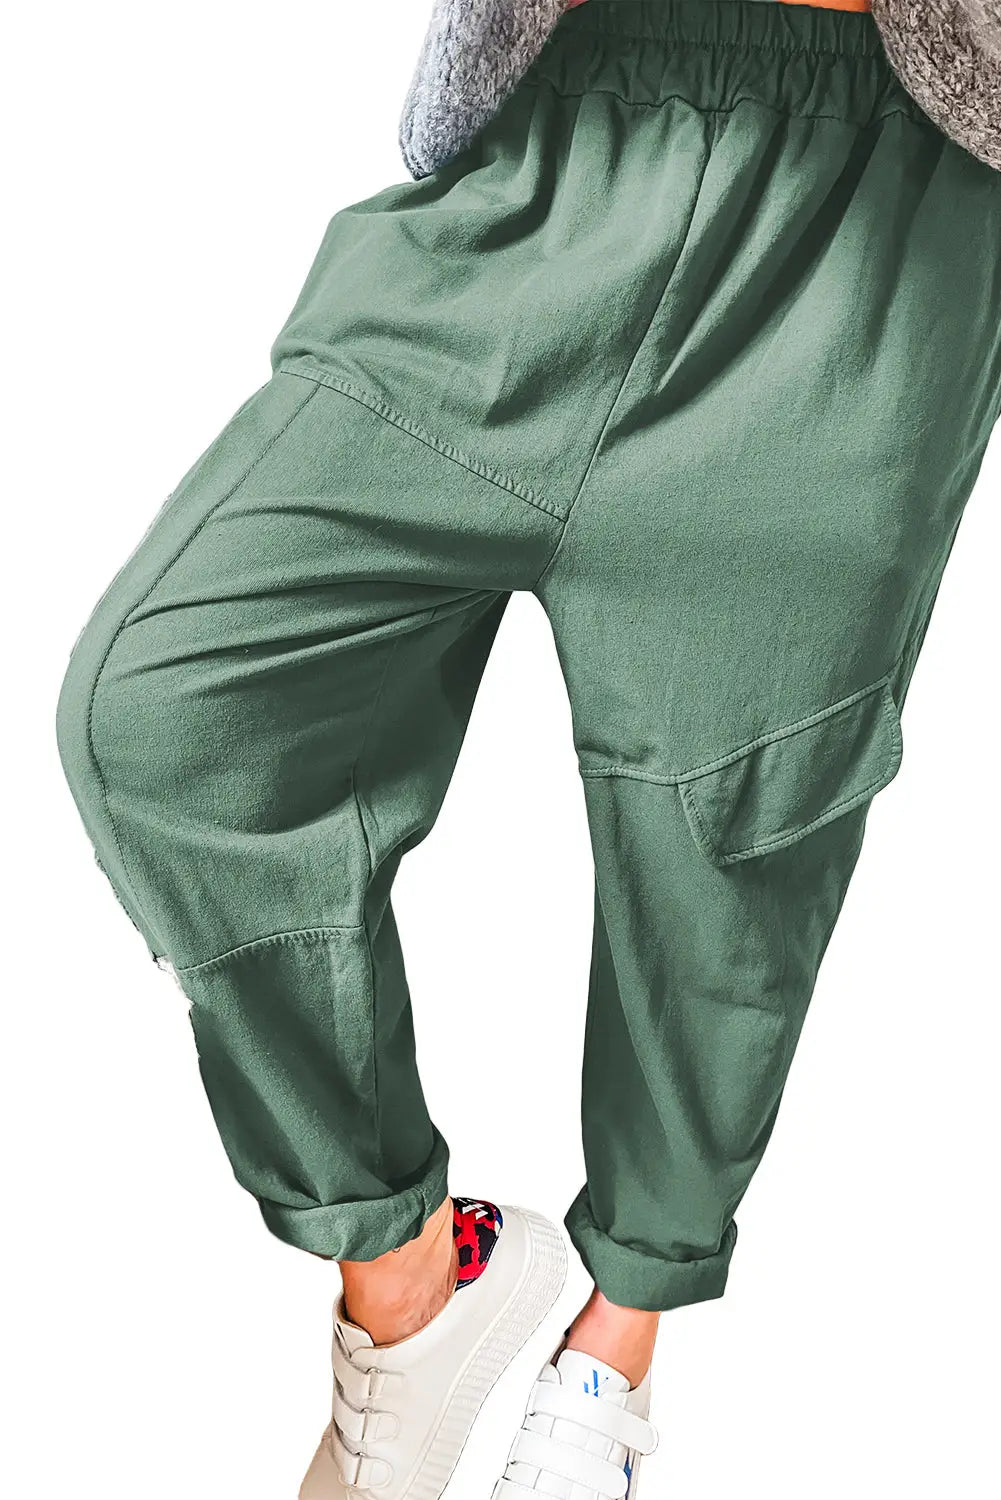 Mist green elastic waist cargo pants - bottoms